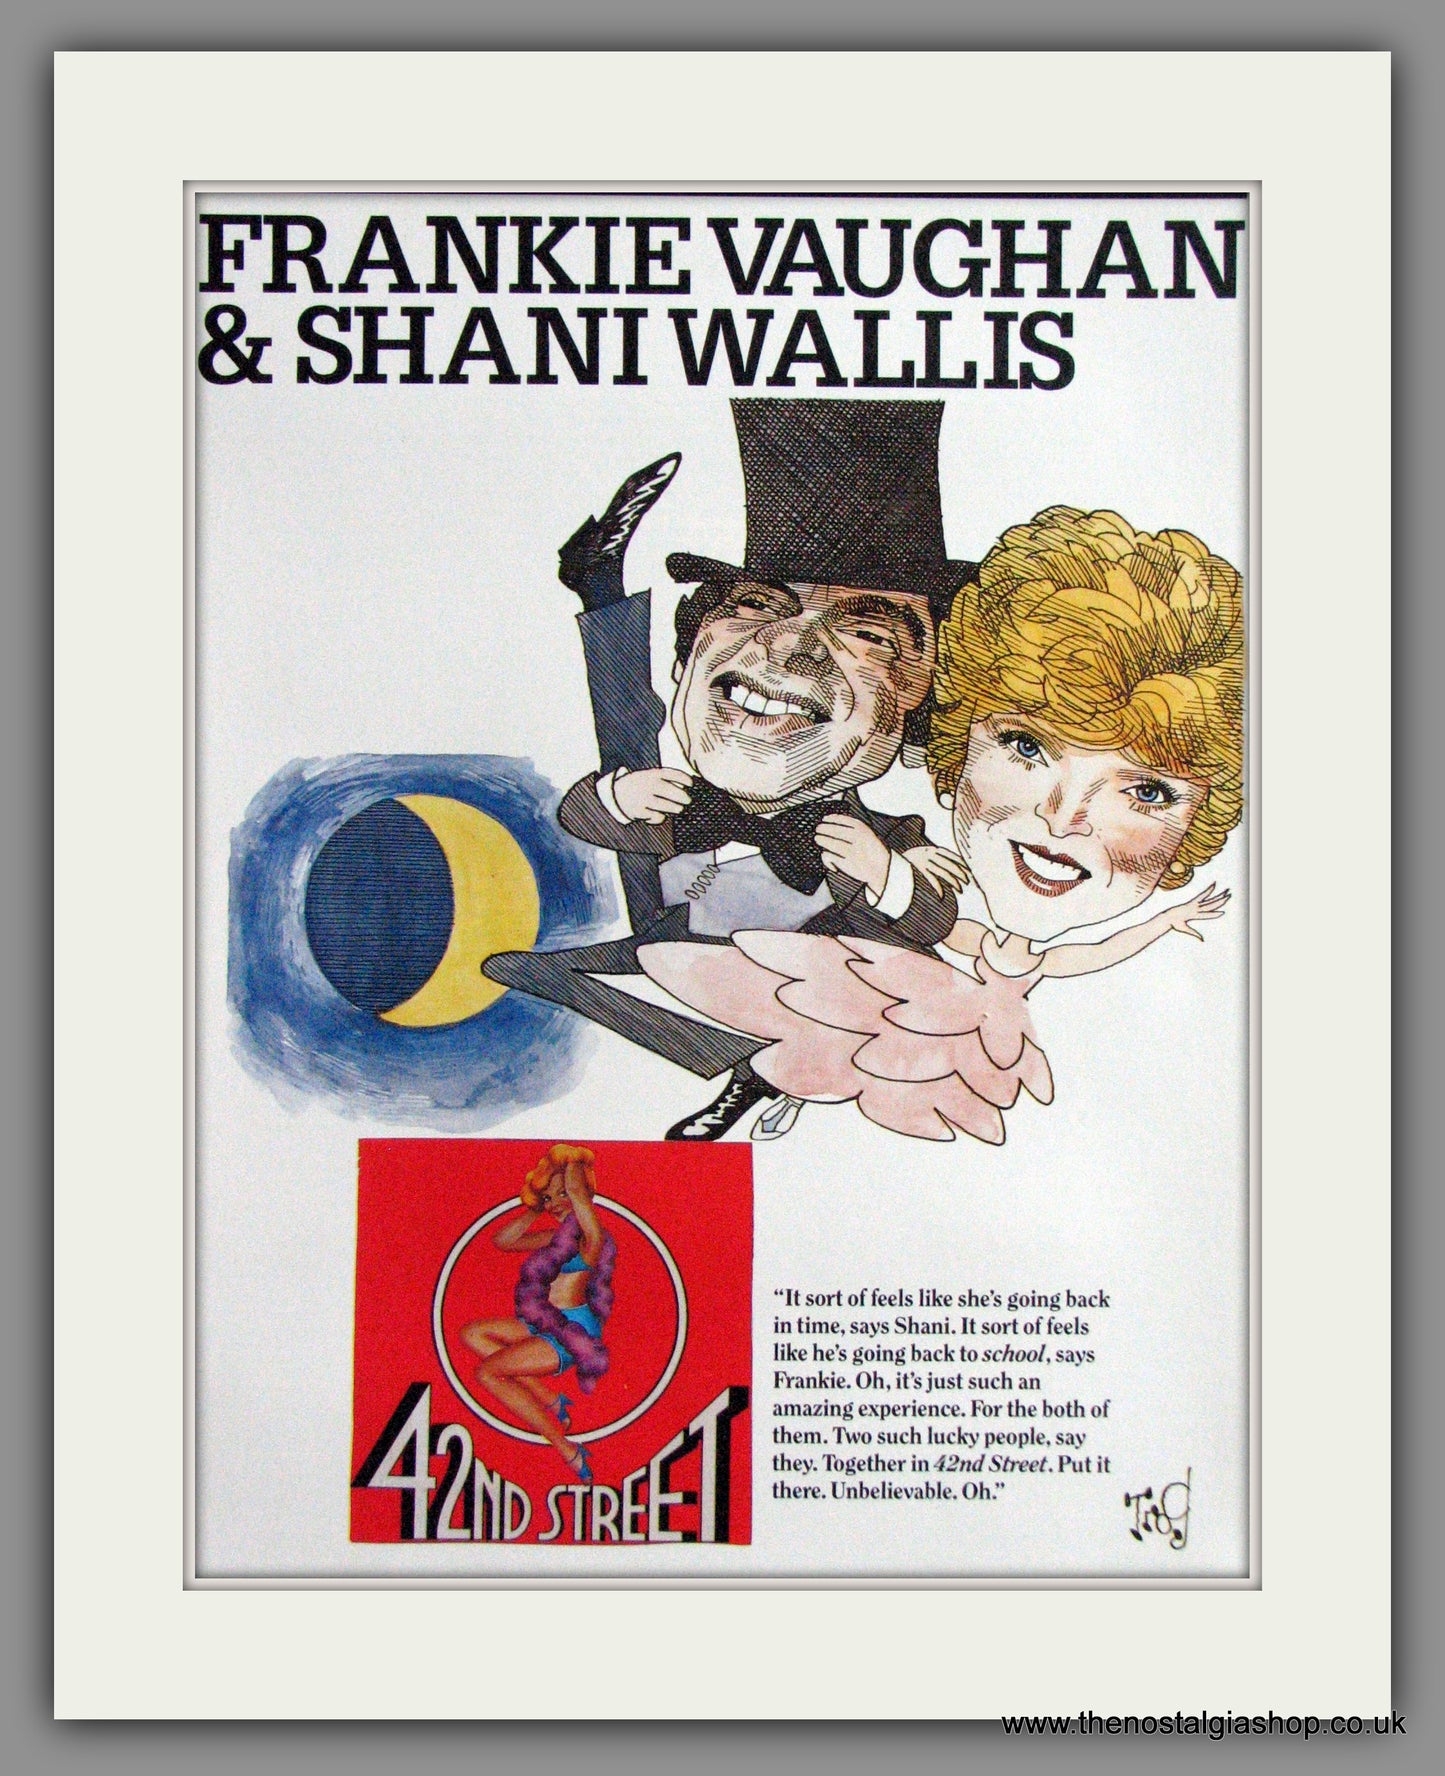 Frankie Vaughan & Shani Wallis - 42nd Street. Vintage Advert 1985 (ref AD50430)